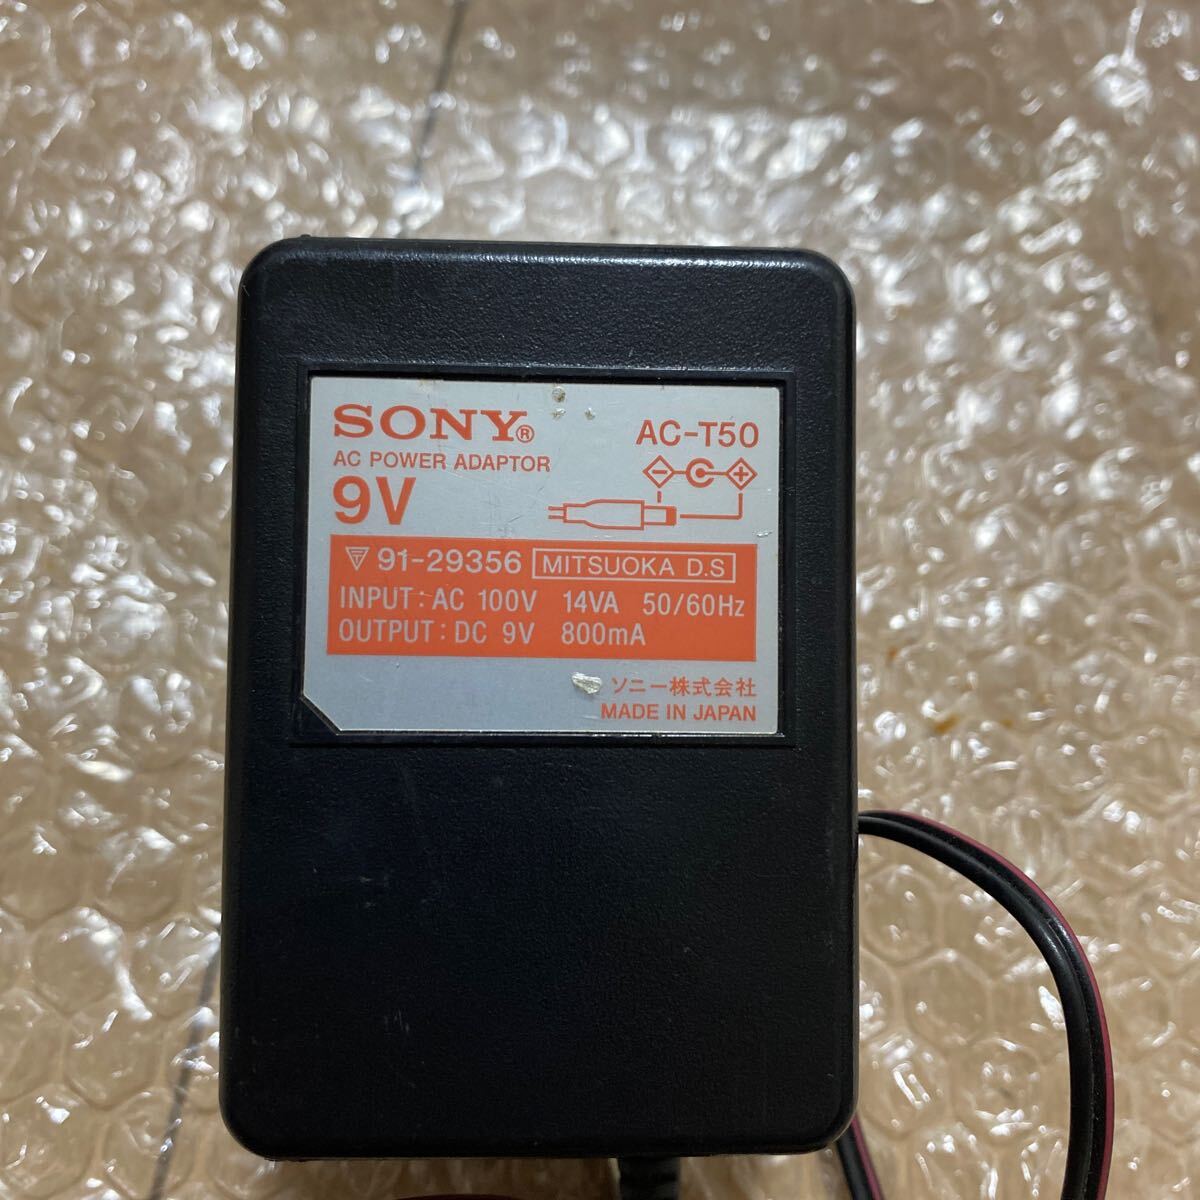  Sony SONY AC-T50 AC adaptor 9V 800mA secondhand goods 